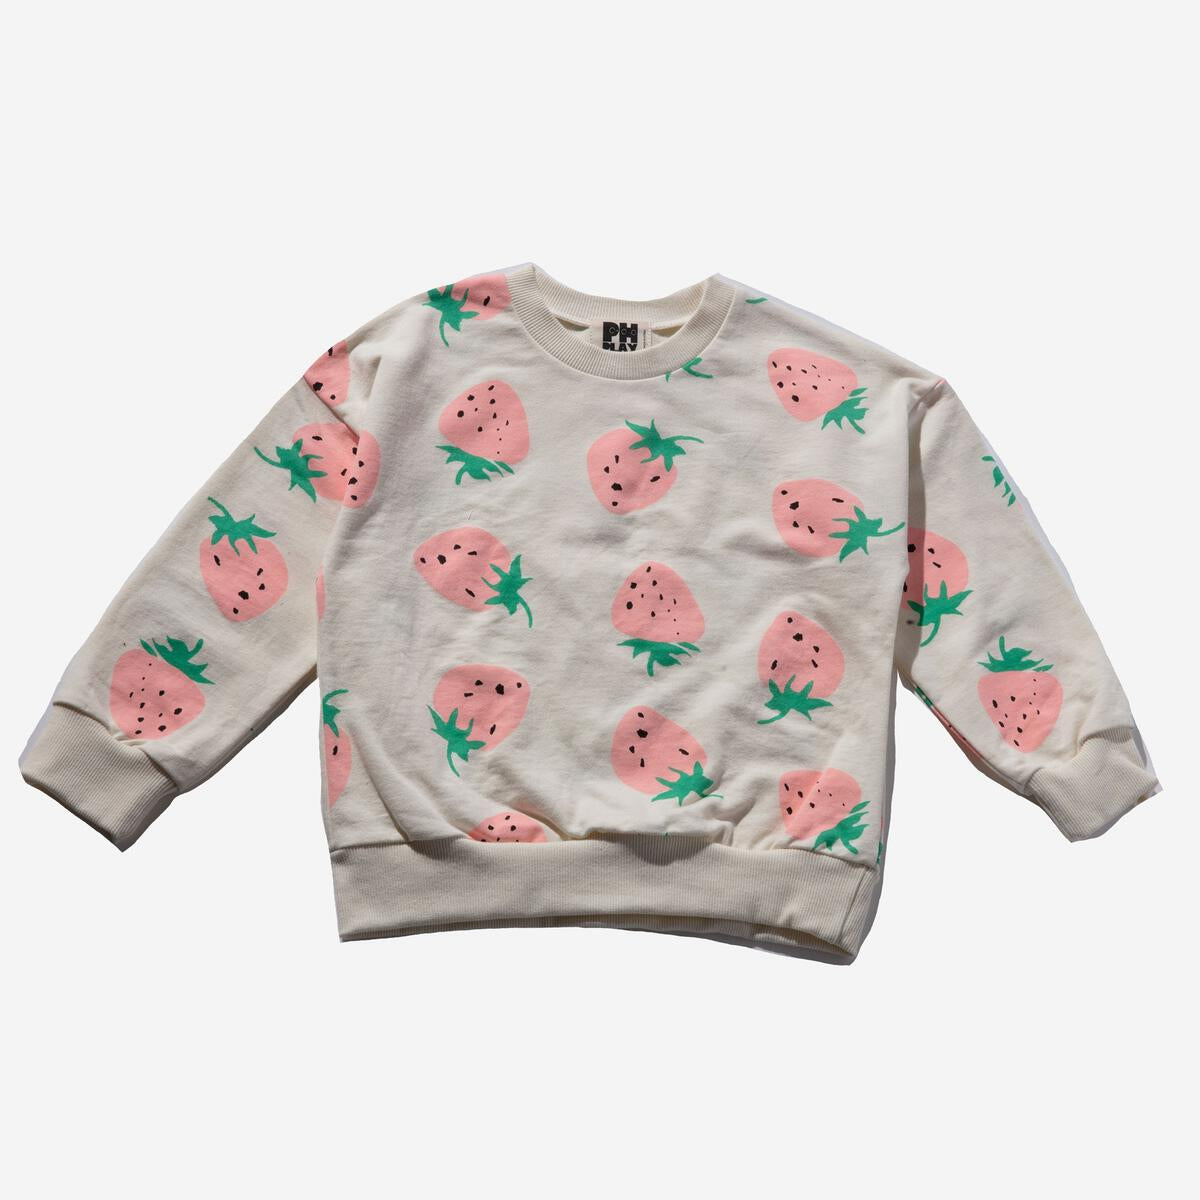 Strawberry sweatshirt set